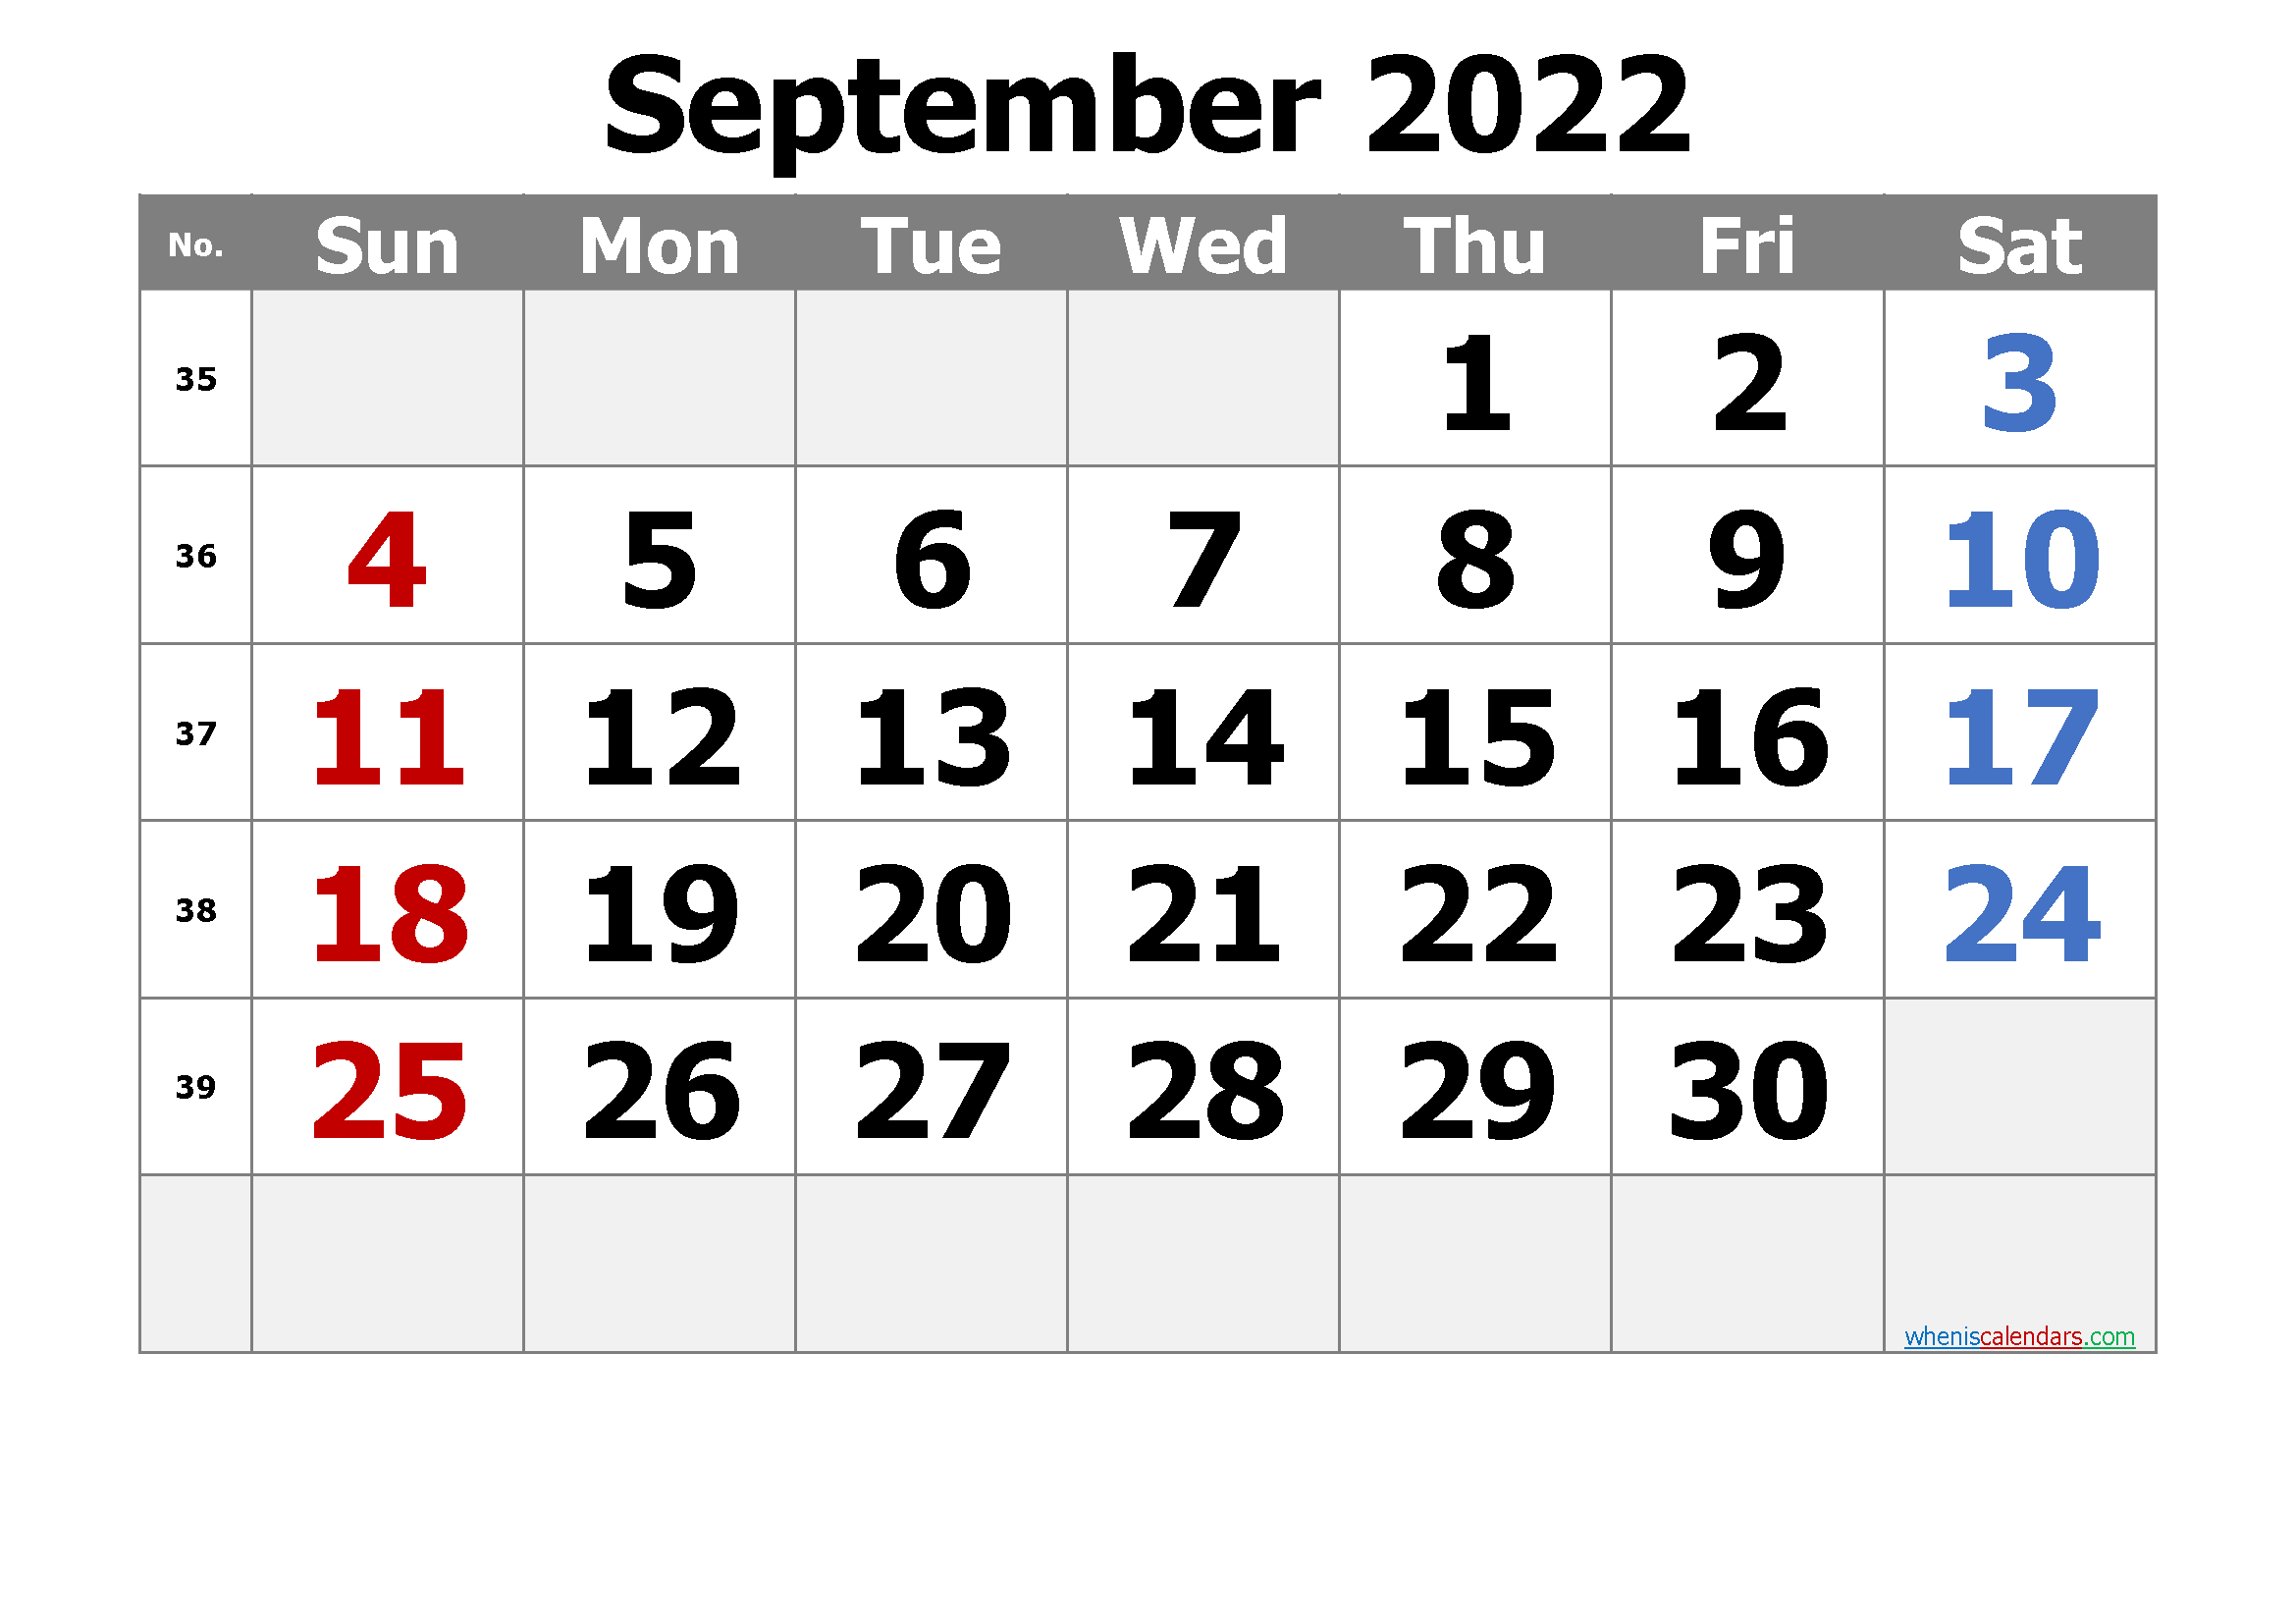 Free September 2022 Calendar Printable as PDF and Image